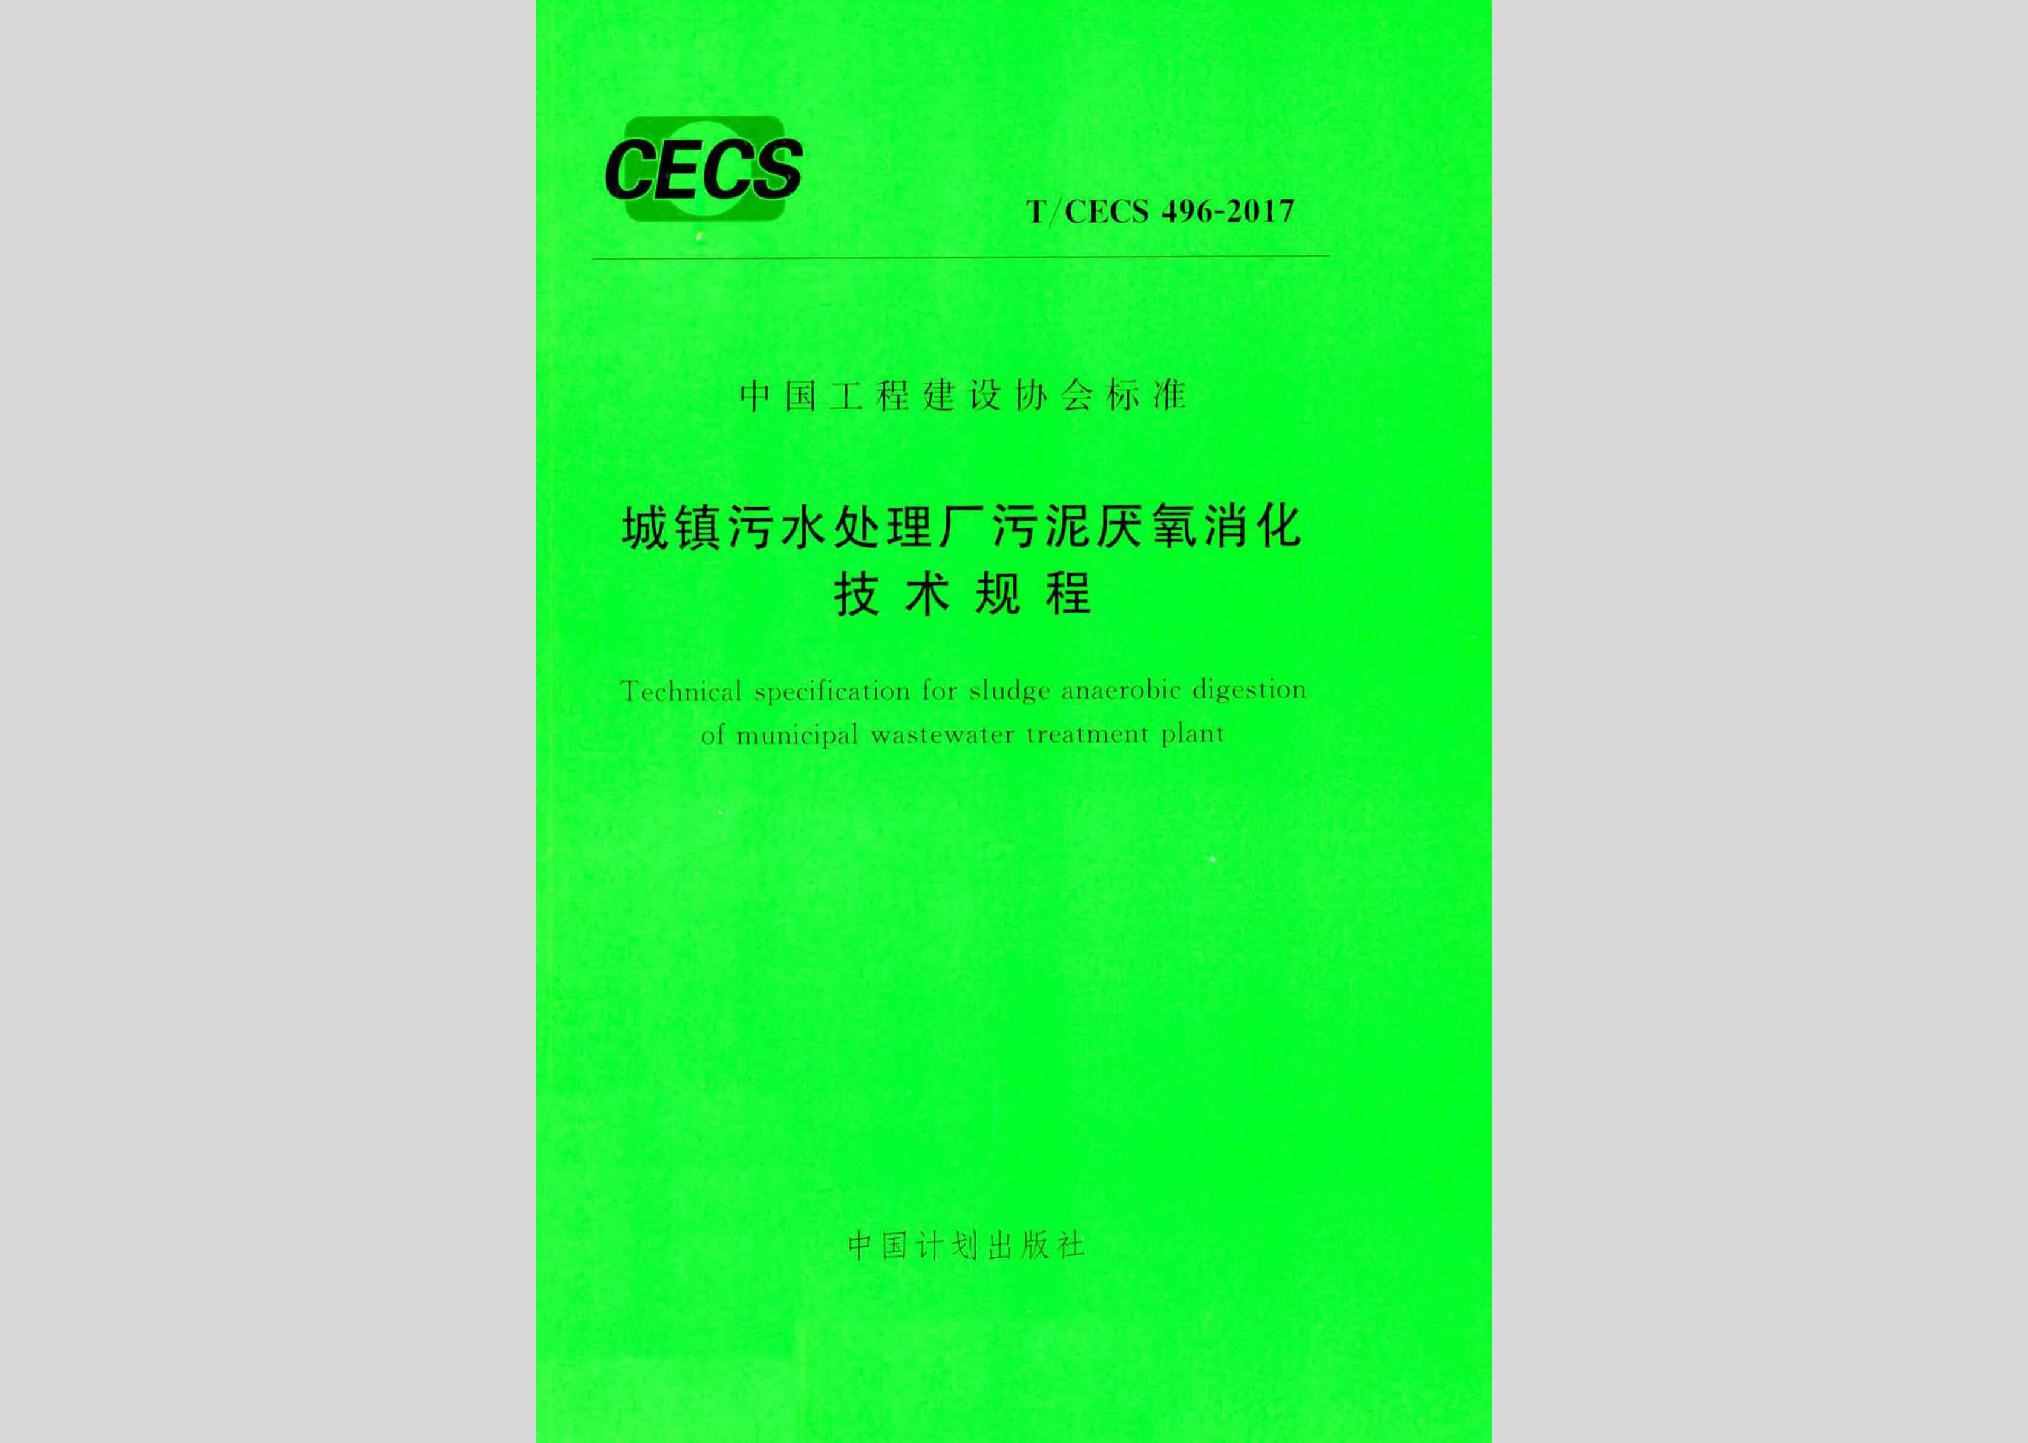 T/CECS496-2017：城镇污水处理厂污泥厌氧消化技术规程